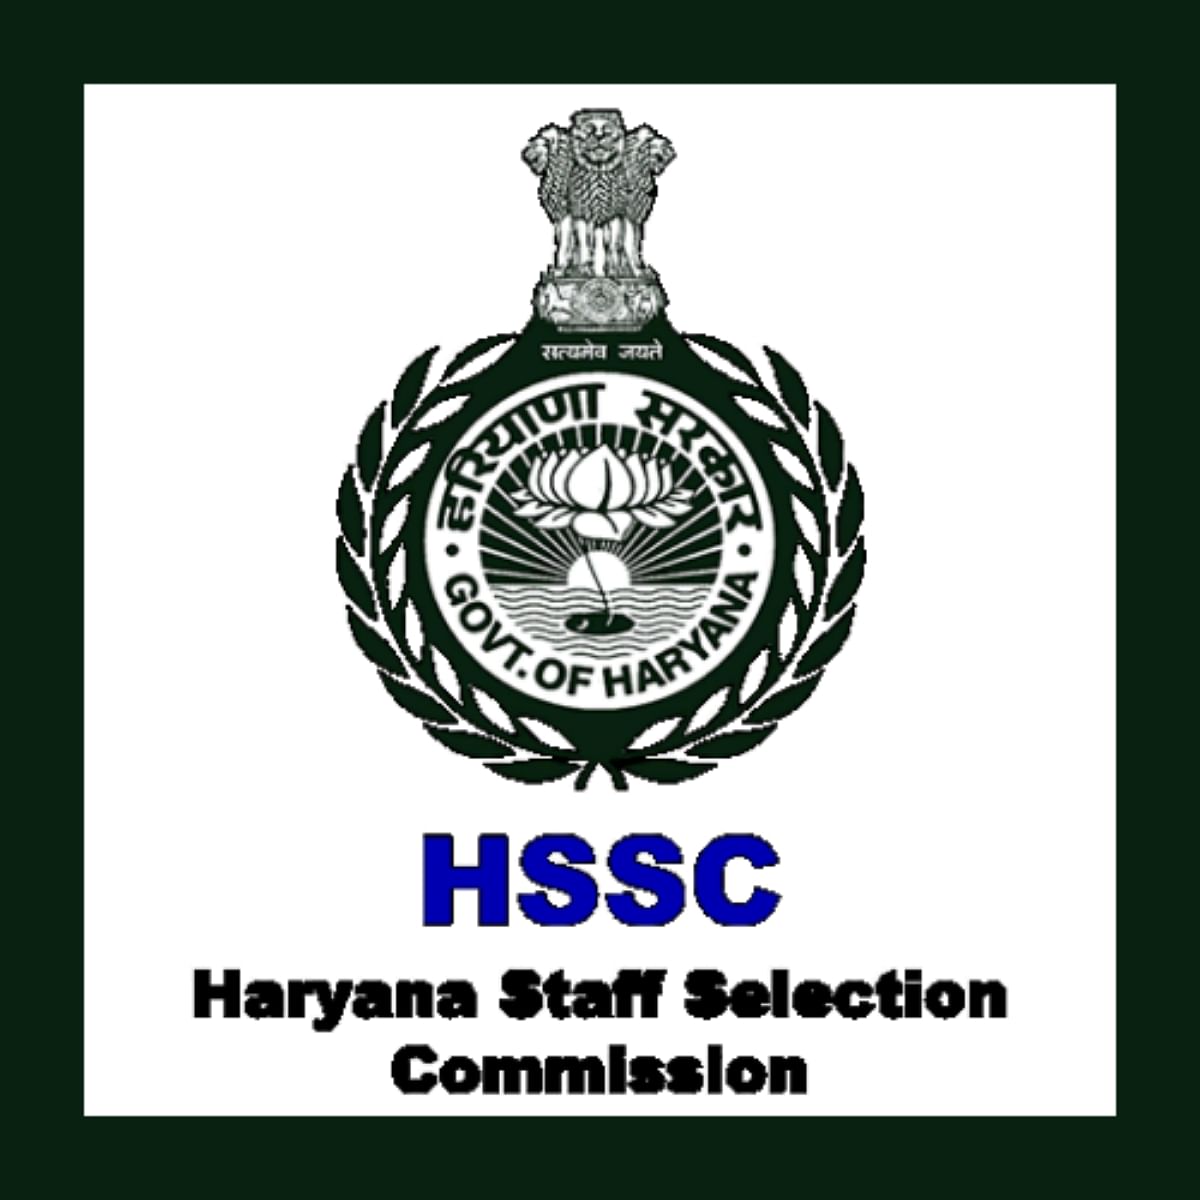 HSSC Recruitment 2021: Last 2 Days Left to Apply for 534 PGT Sanskrit Posts, Apply Soon